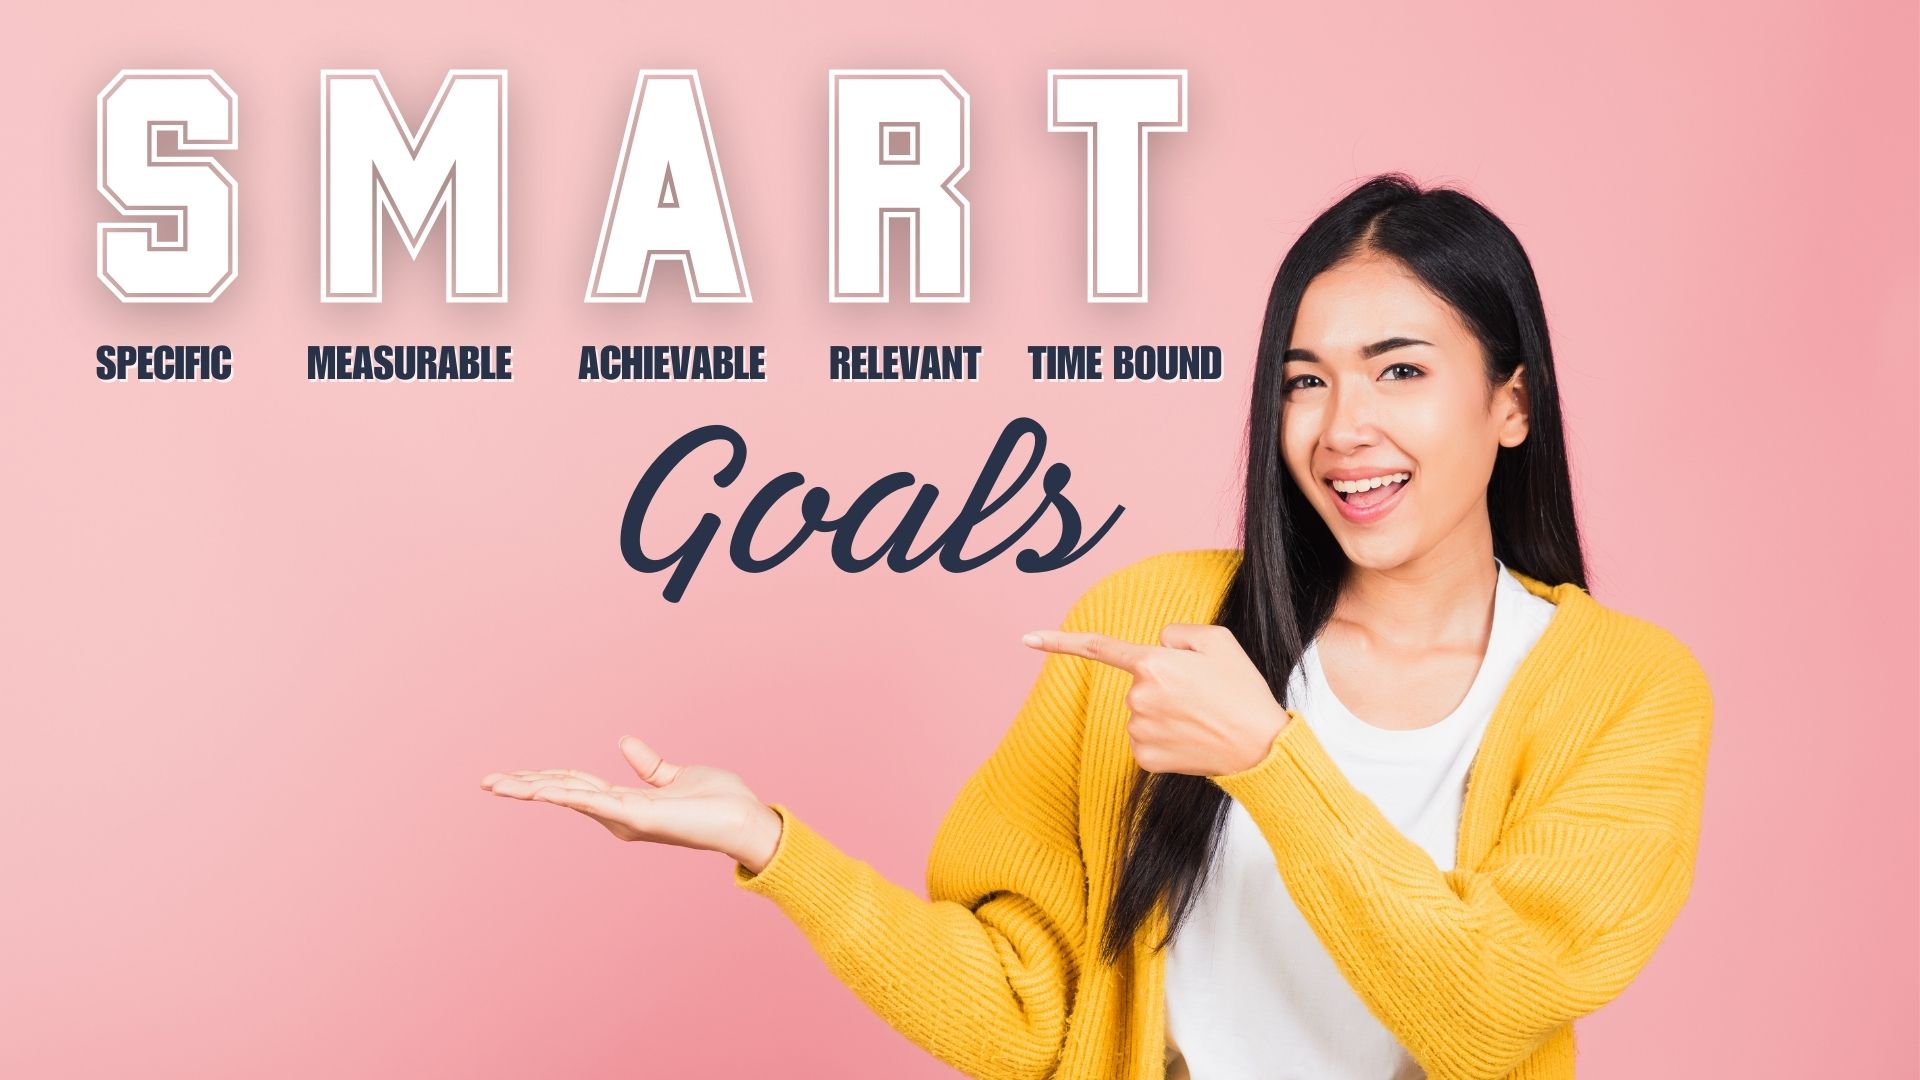 SMART Goals: Specific, Measurable, Achievable, Relevant, Time Bound